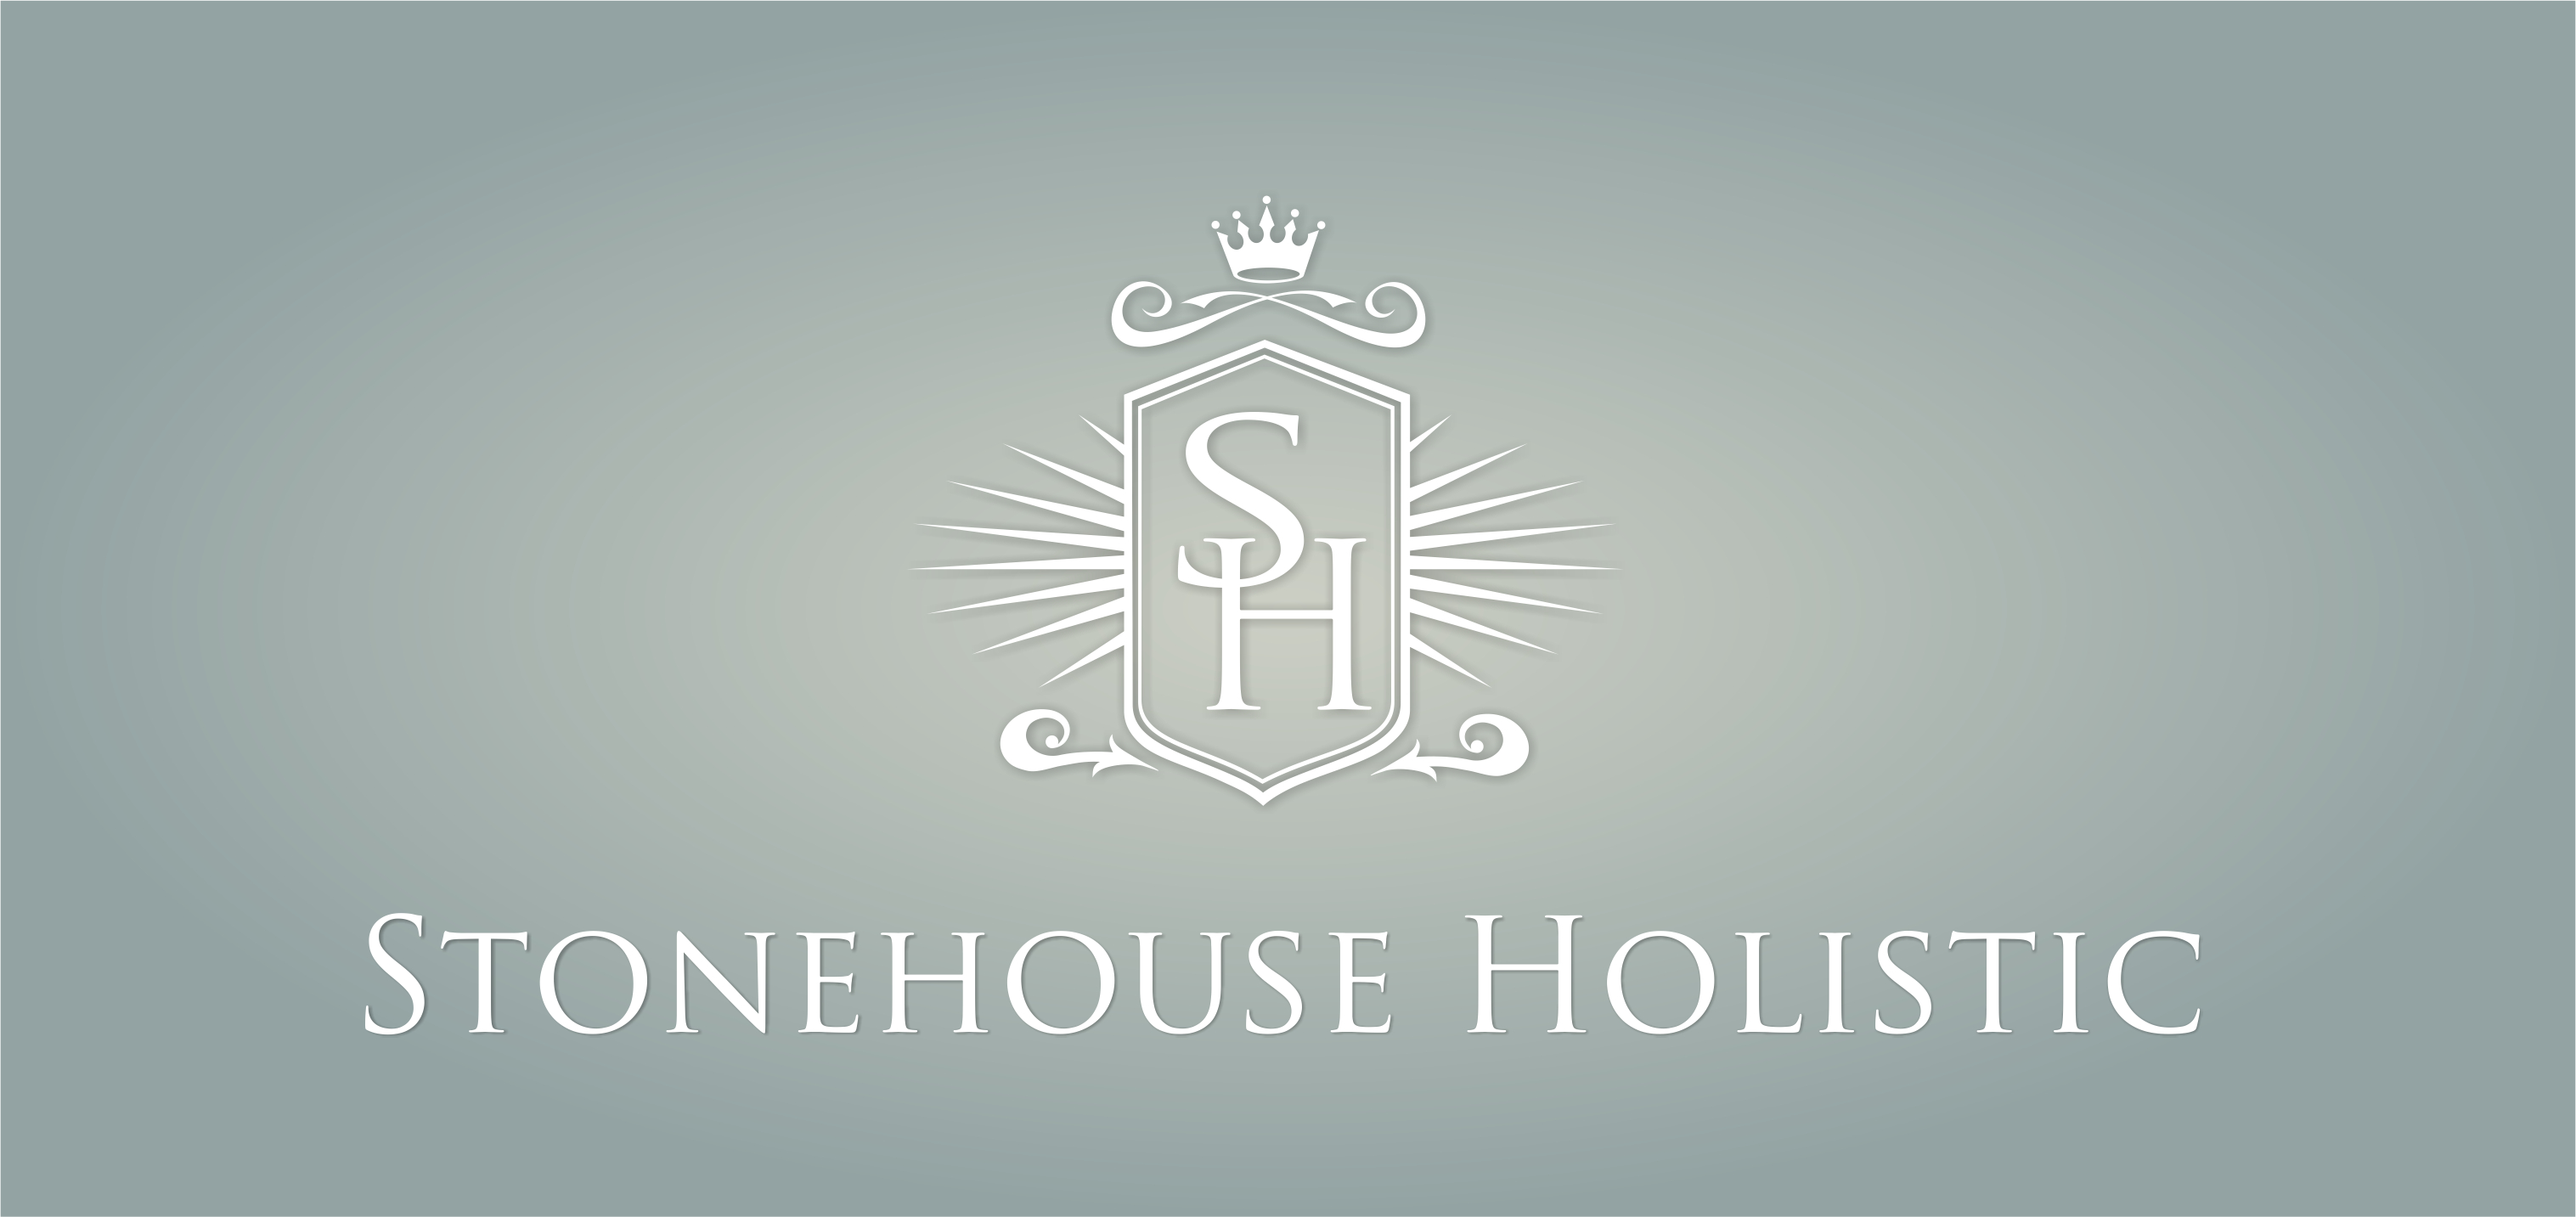 Stonehouse Holistic